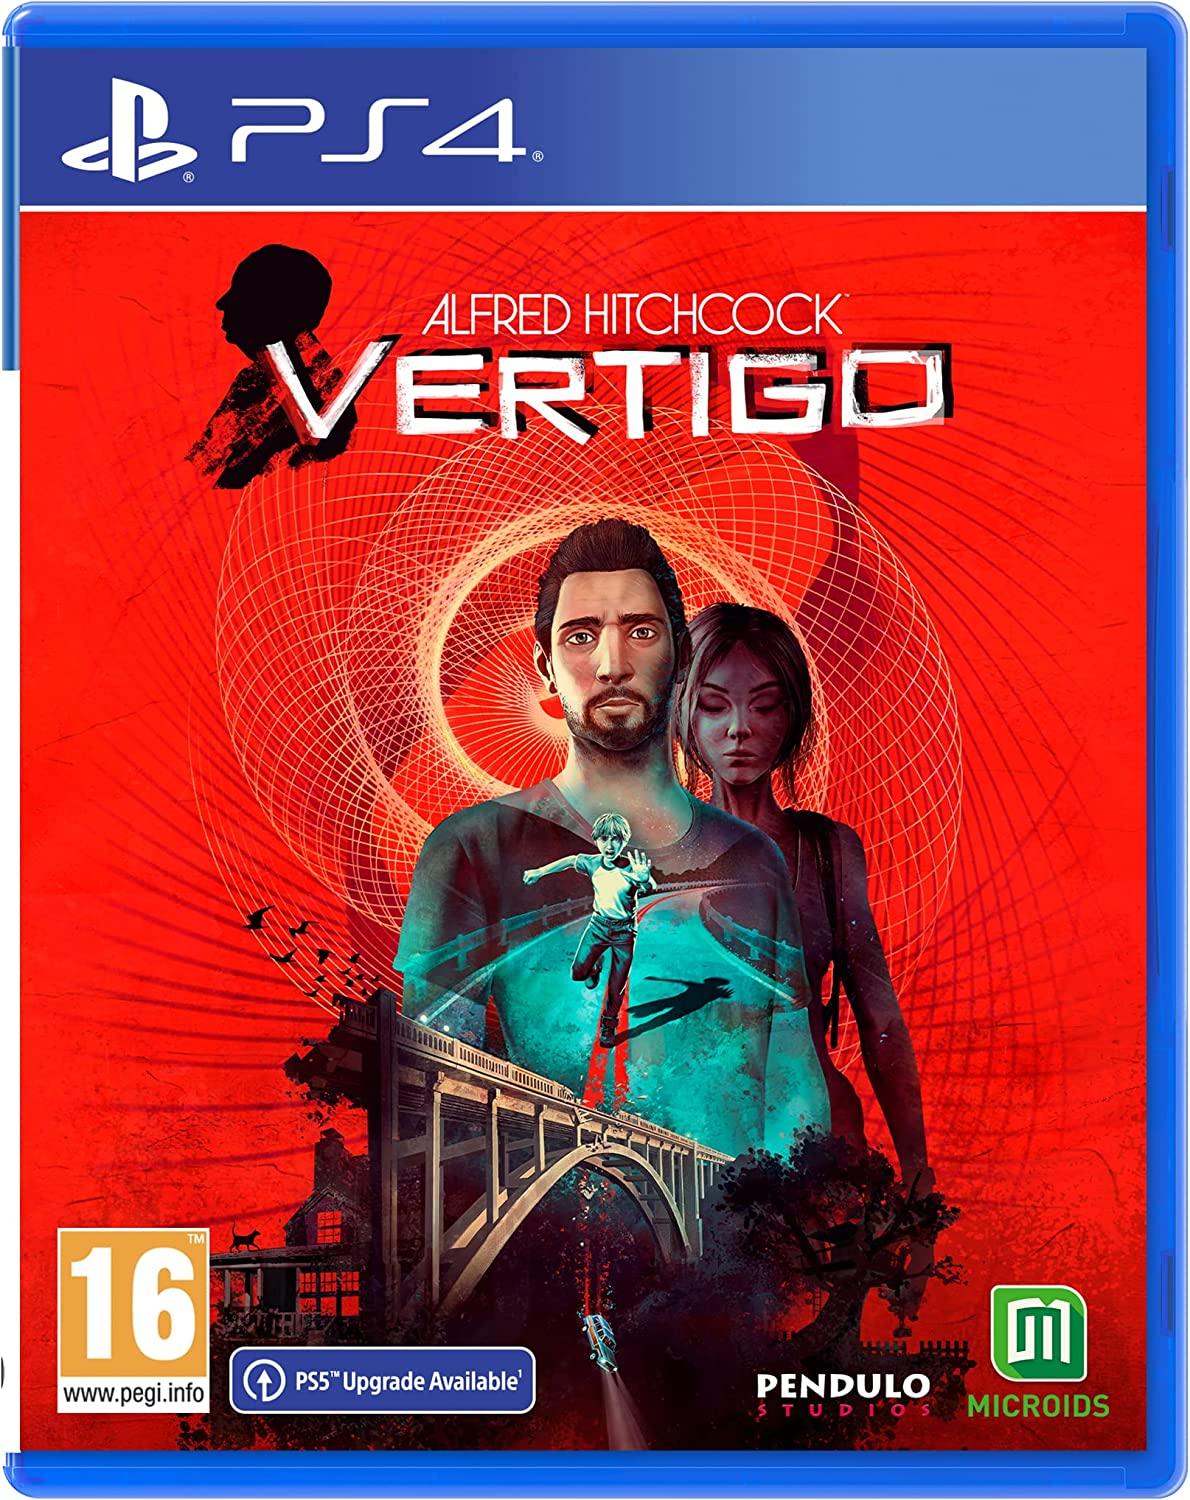 Alfred Hitchcock: Vertigo - Limited Edition (PS4) - GameStore.mt | Powered by Flutisat